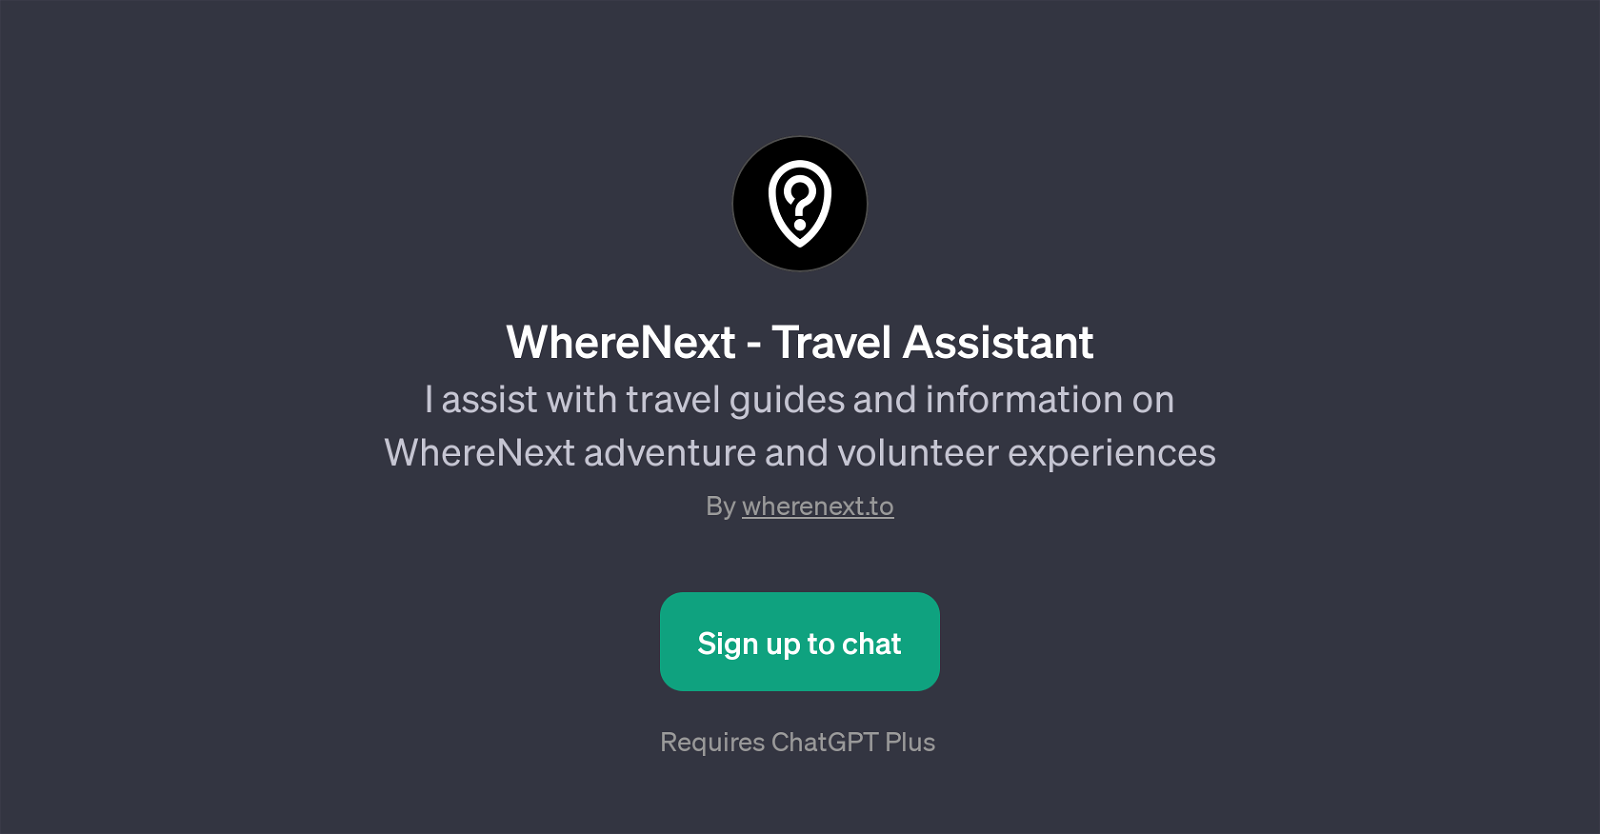 WhereNext - Travel Assistant website